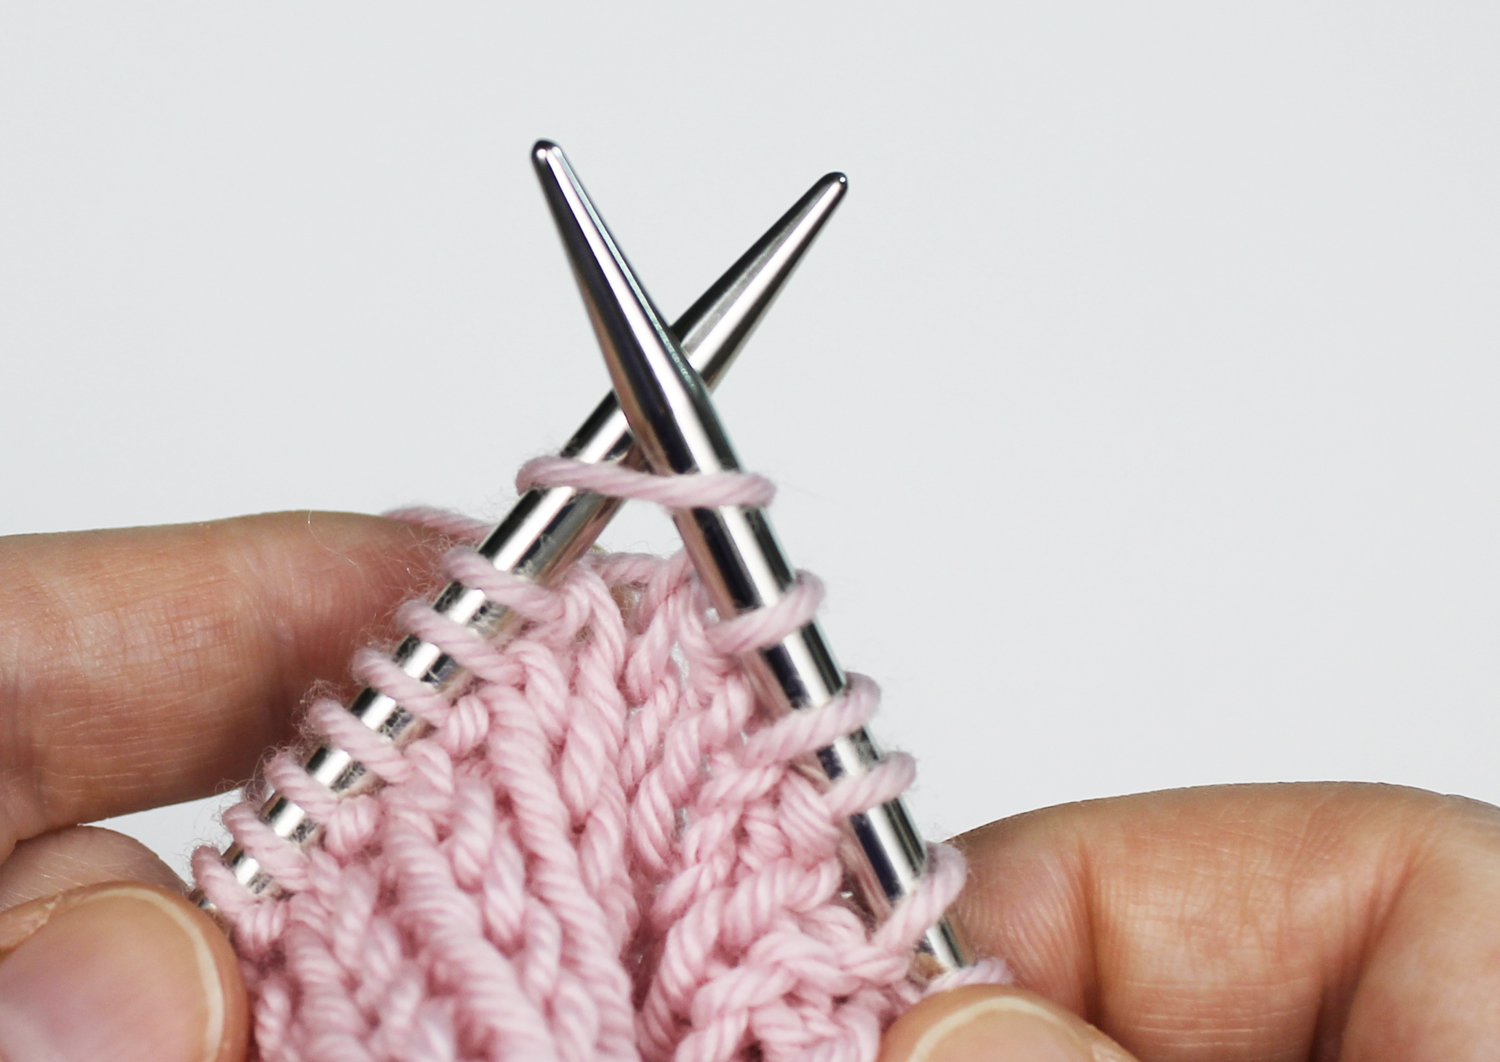 Portuguese-style knit stitch